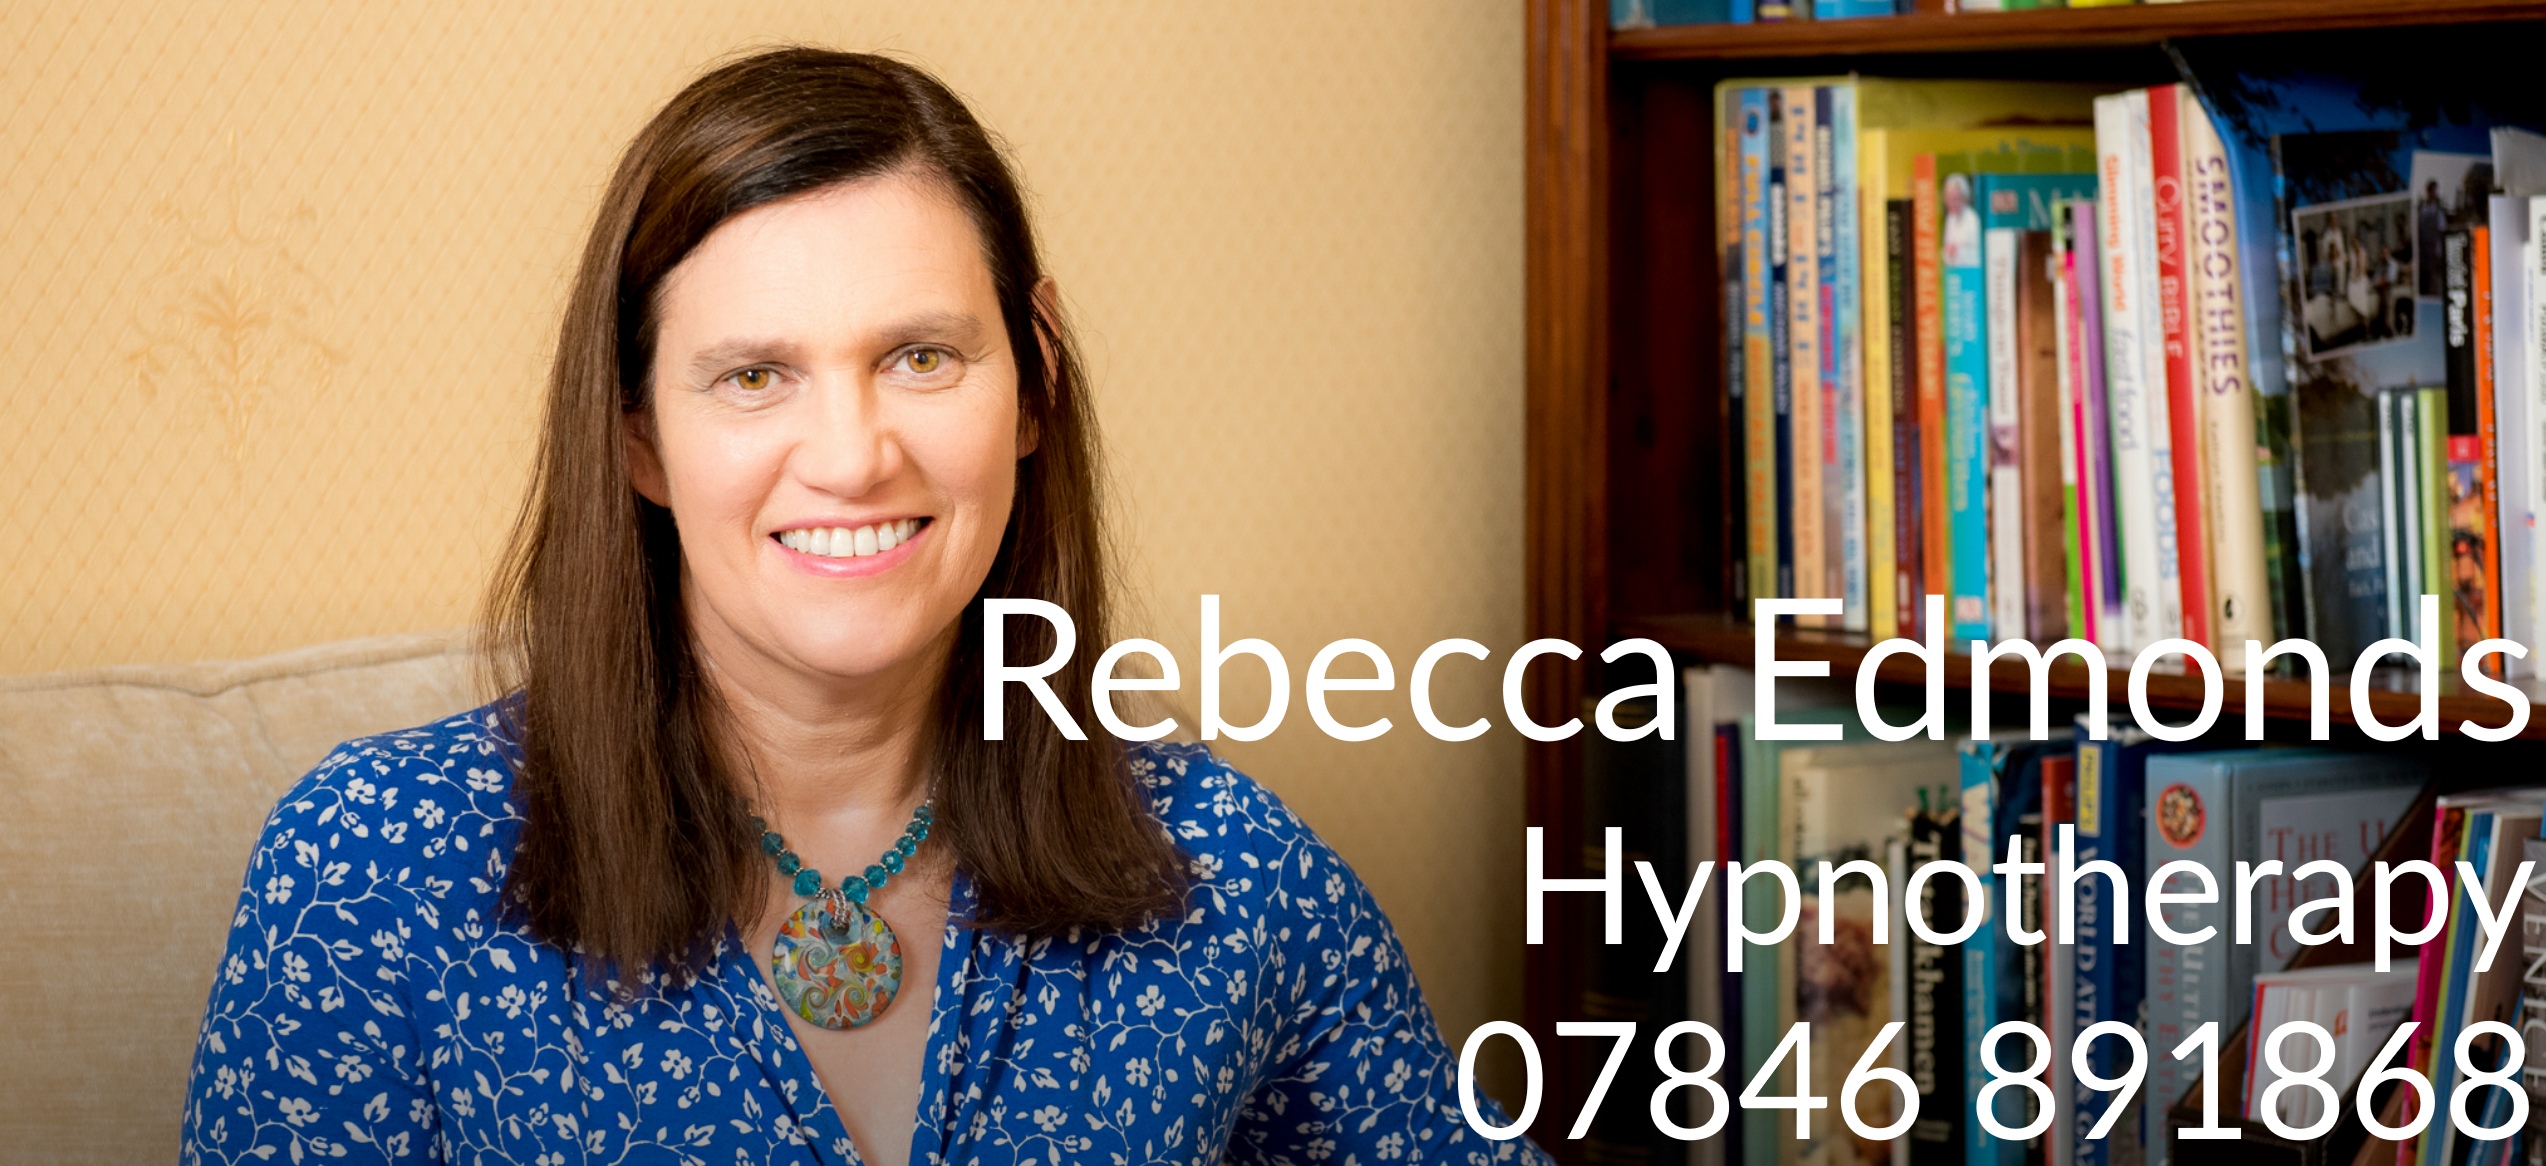 Rebecca Edmonds - Hypnotherapy Hereford and Malvern